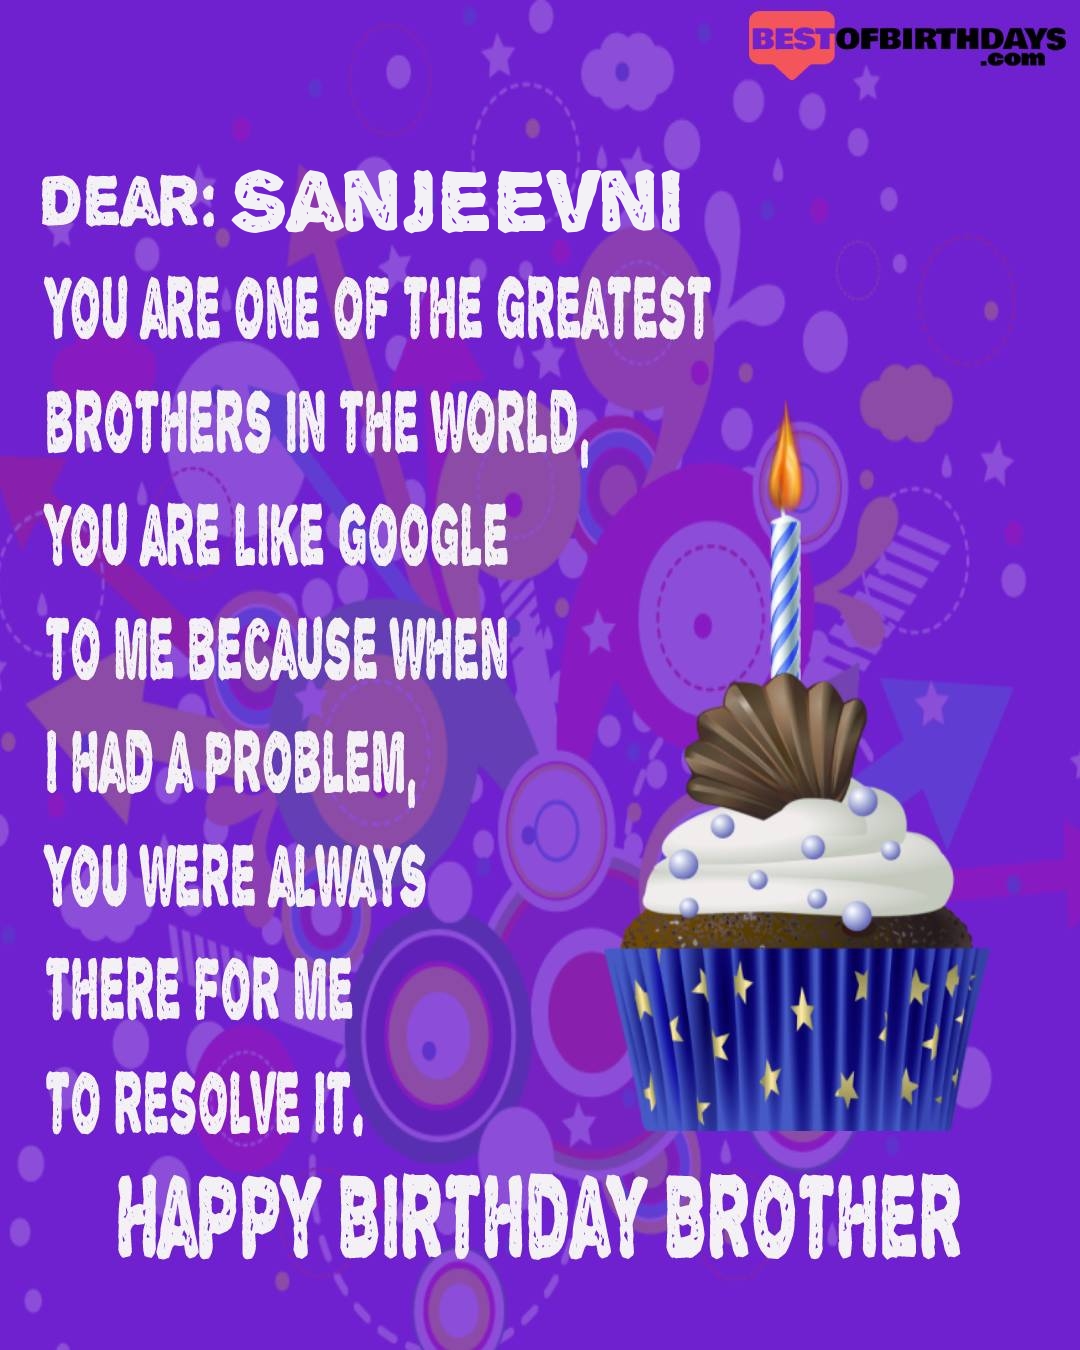 Happy birthday sanjeevni bhai brother bro